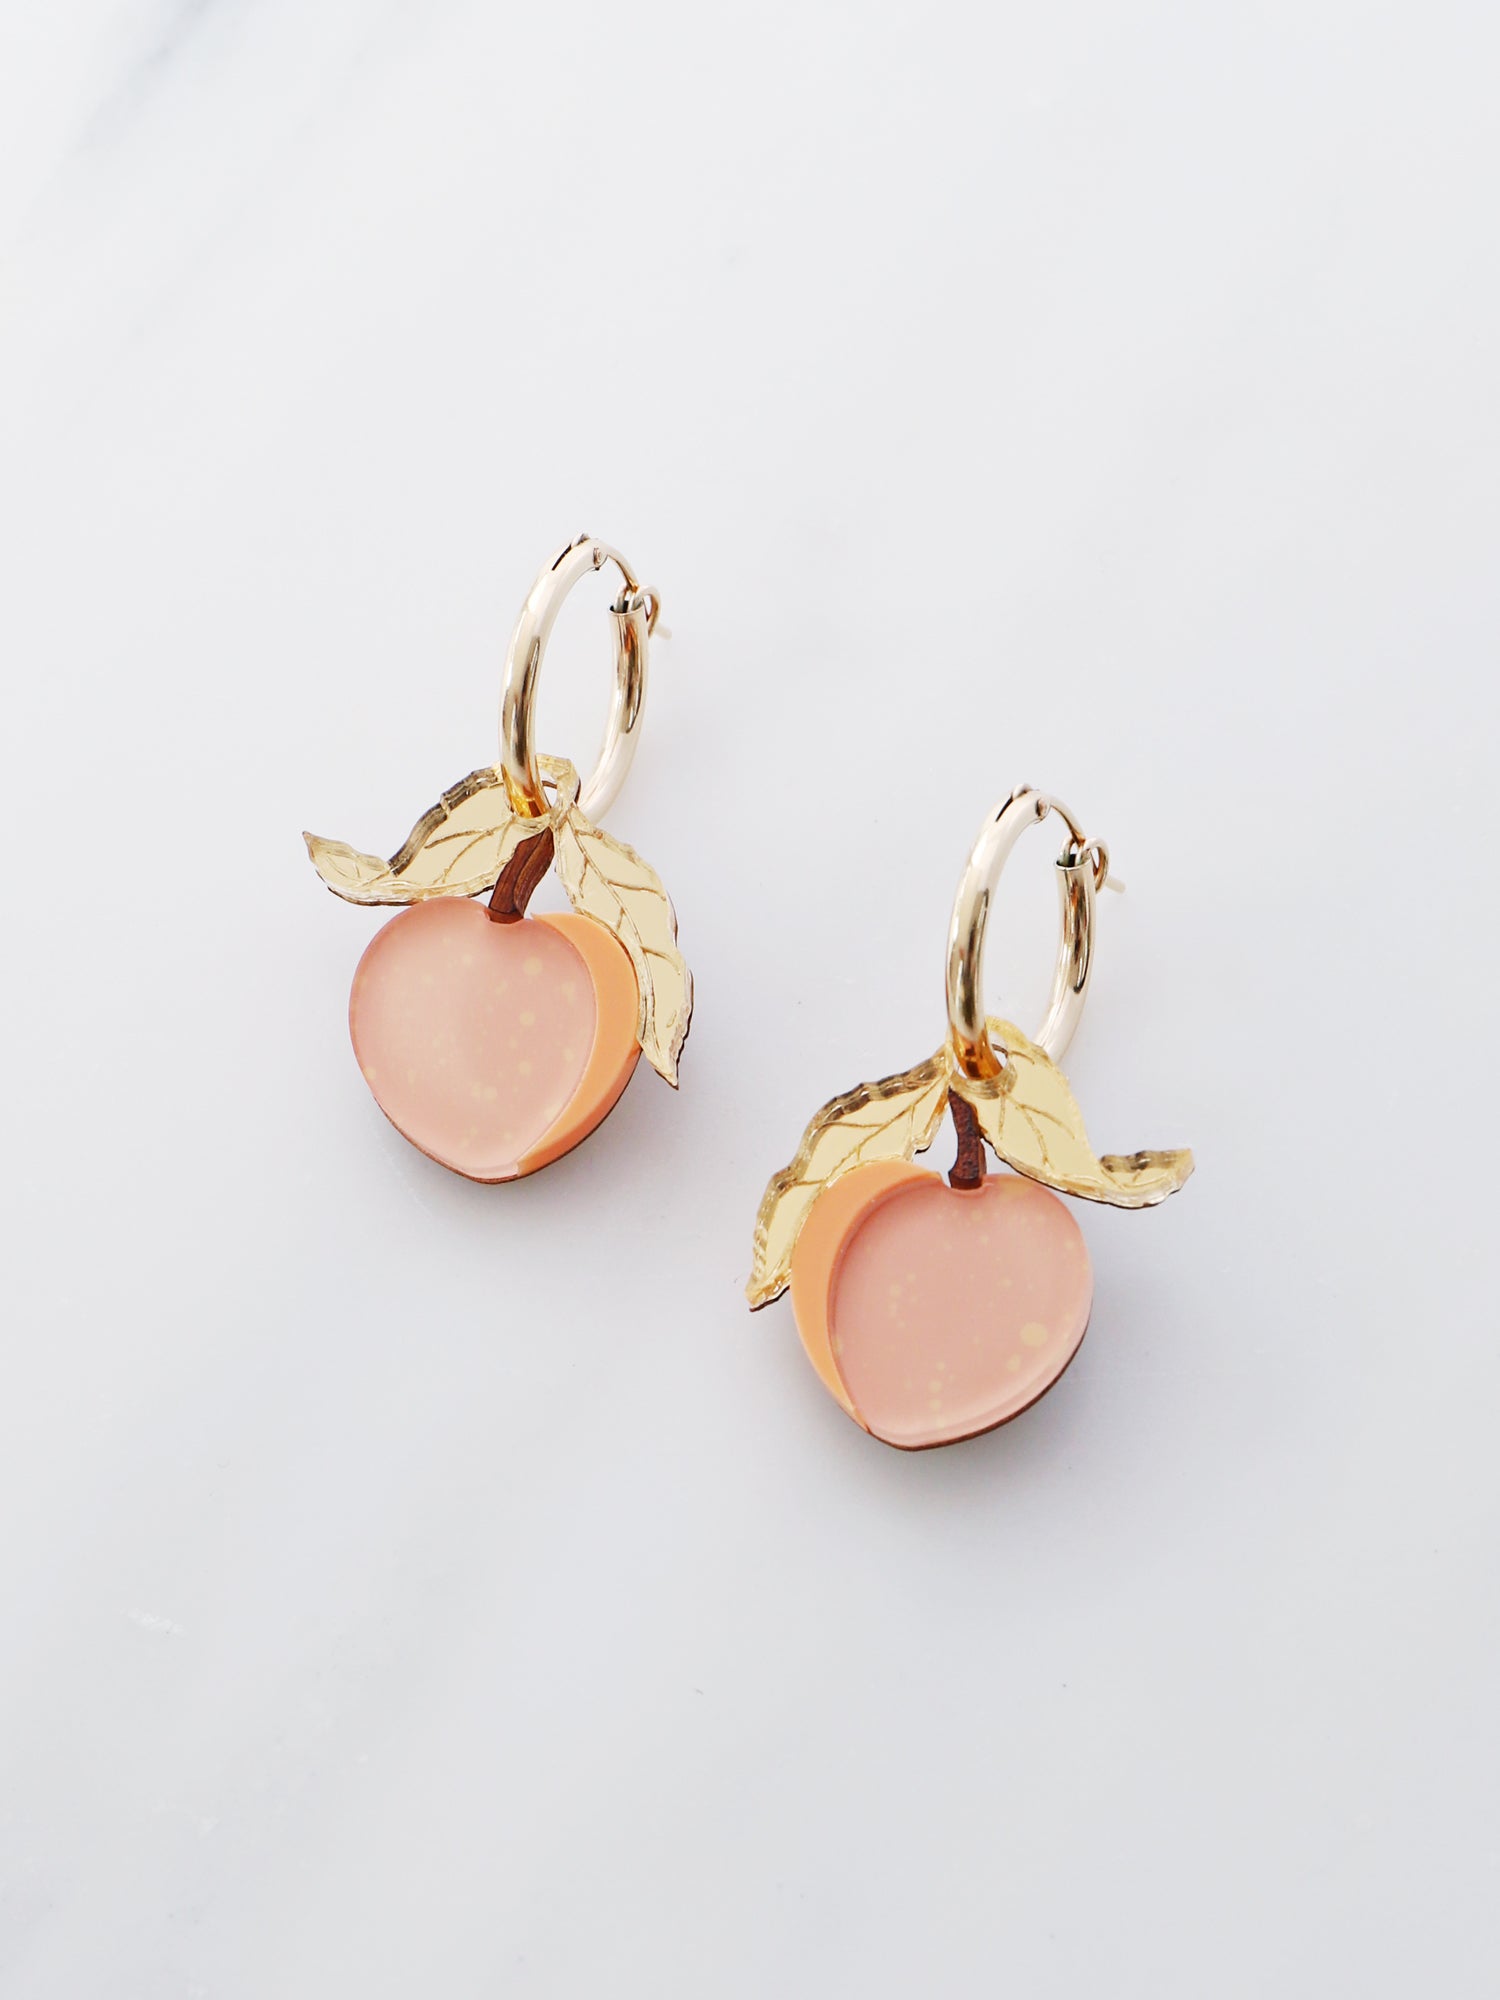 Mini Peach Hoops. Original jewellery handmade in the U.K. by Wolf & Moon.